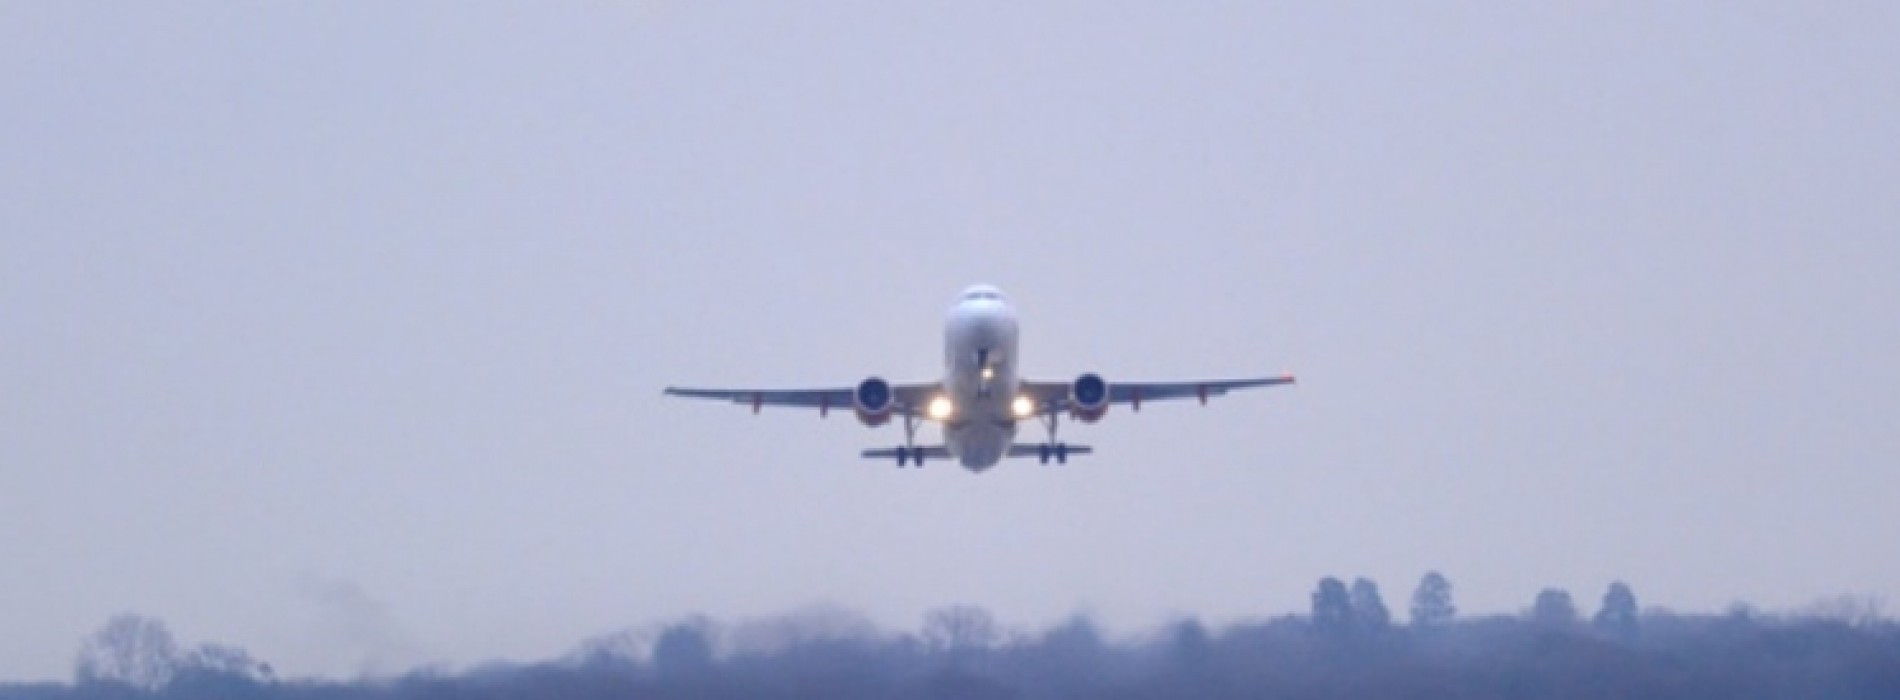 UK government delays runway decision